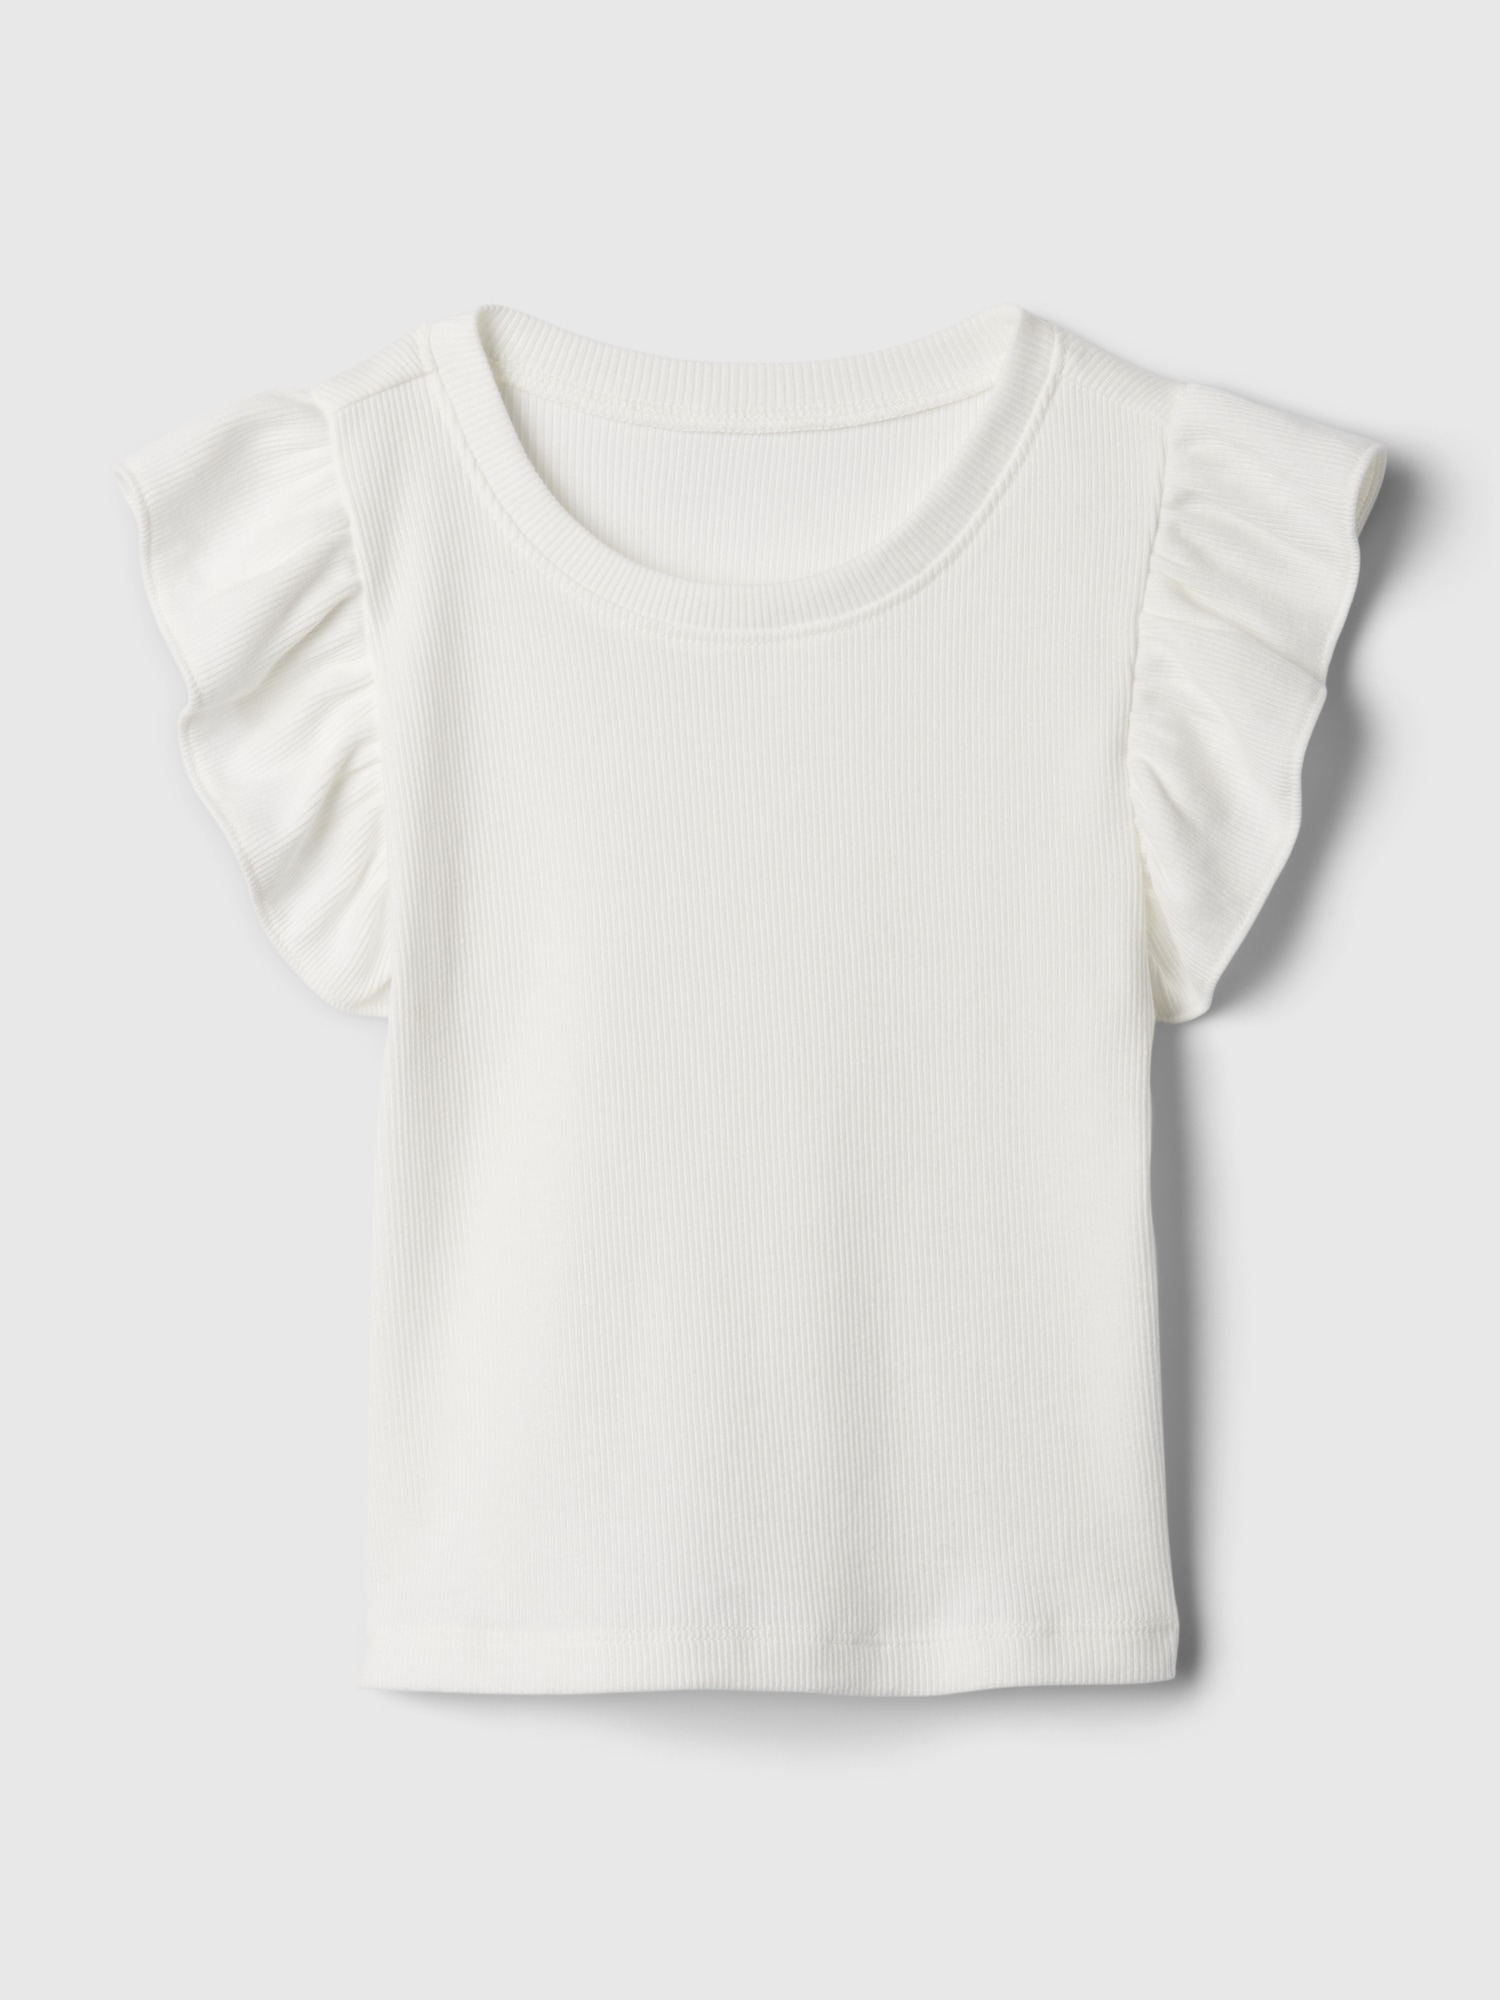 babyGap Mix & Match Ruffle T-Shirt